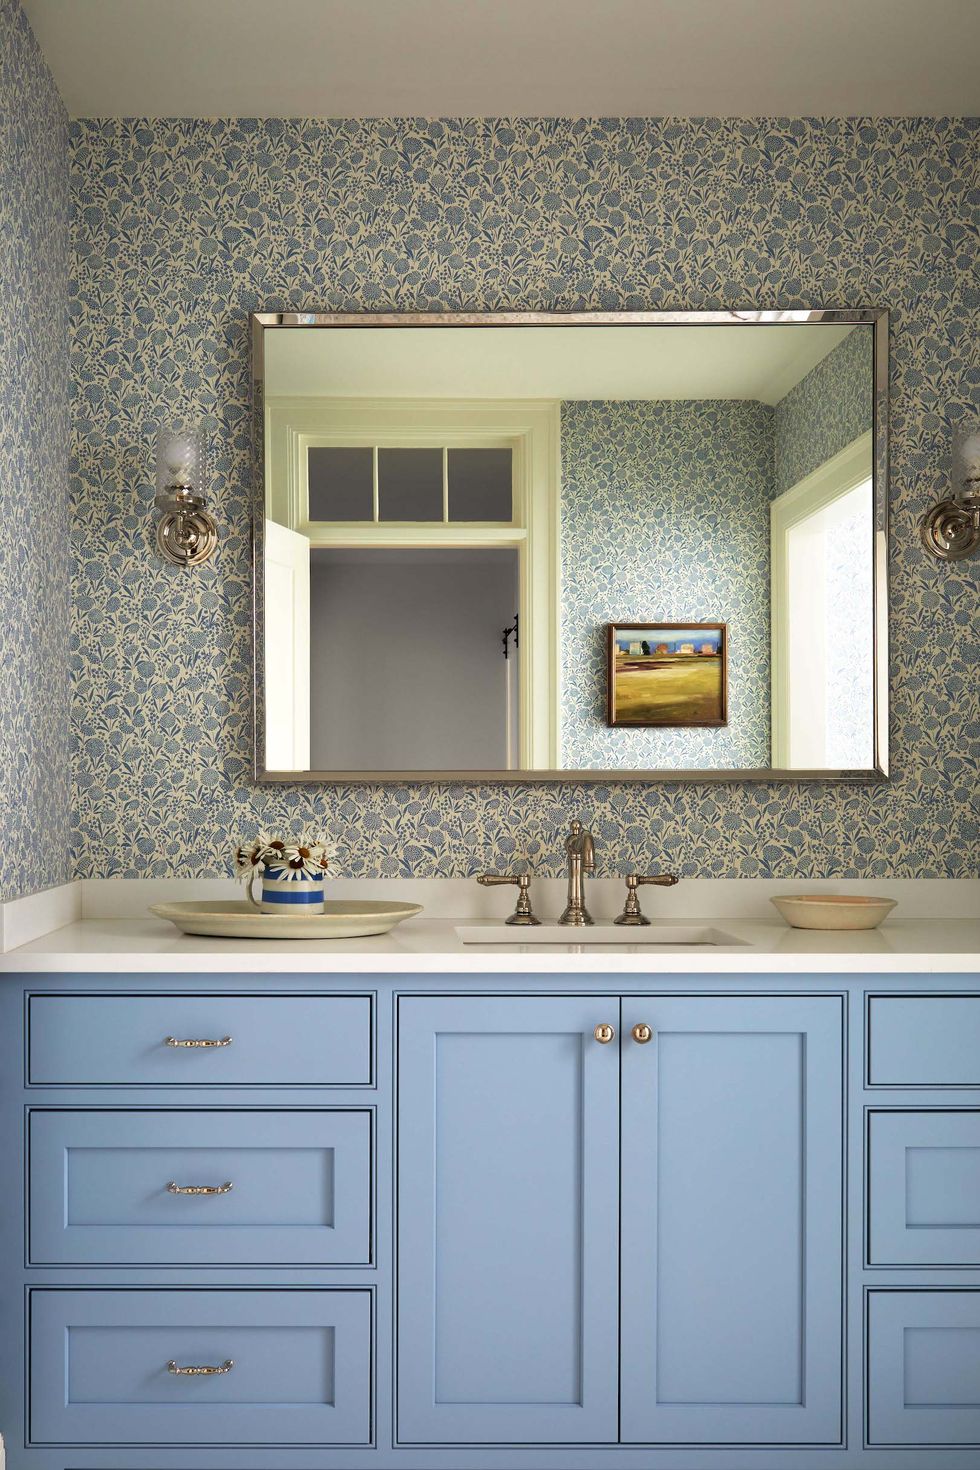 Paint Bathroom Vanity Countertop & Sink: So Easy! - A Piece Of Rainbow